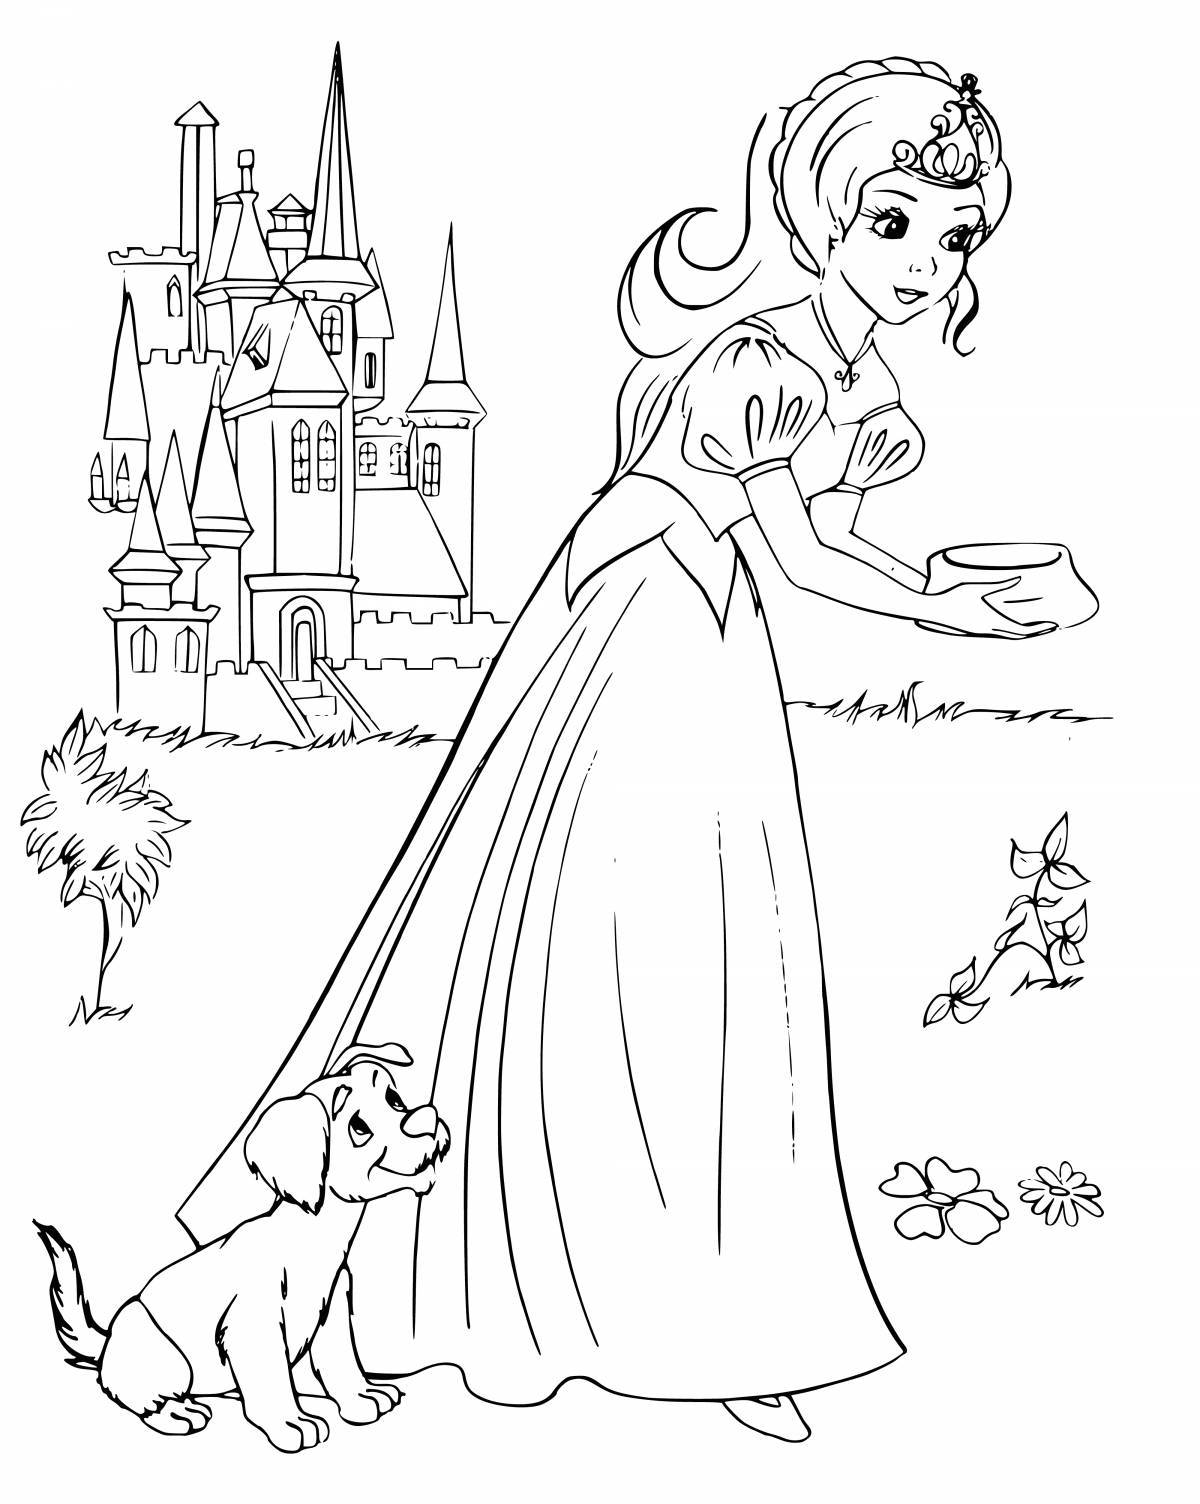 Glamorous princess castle coloring page